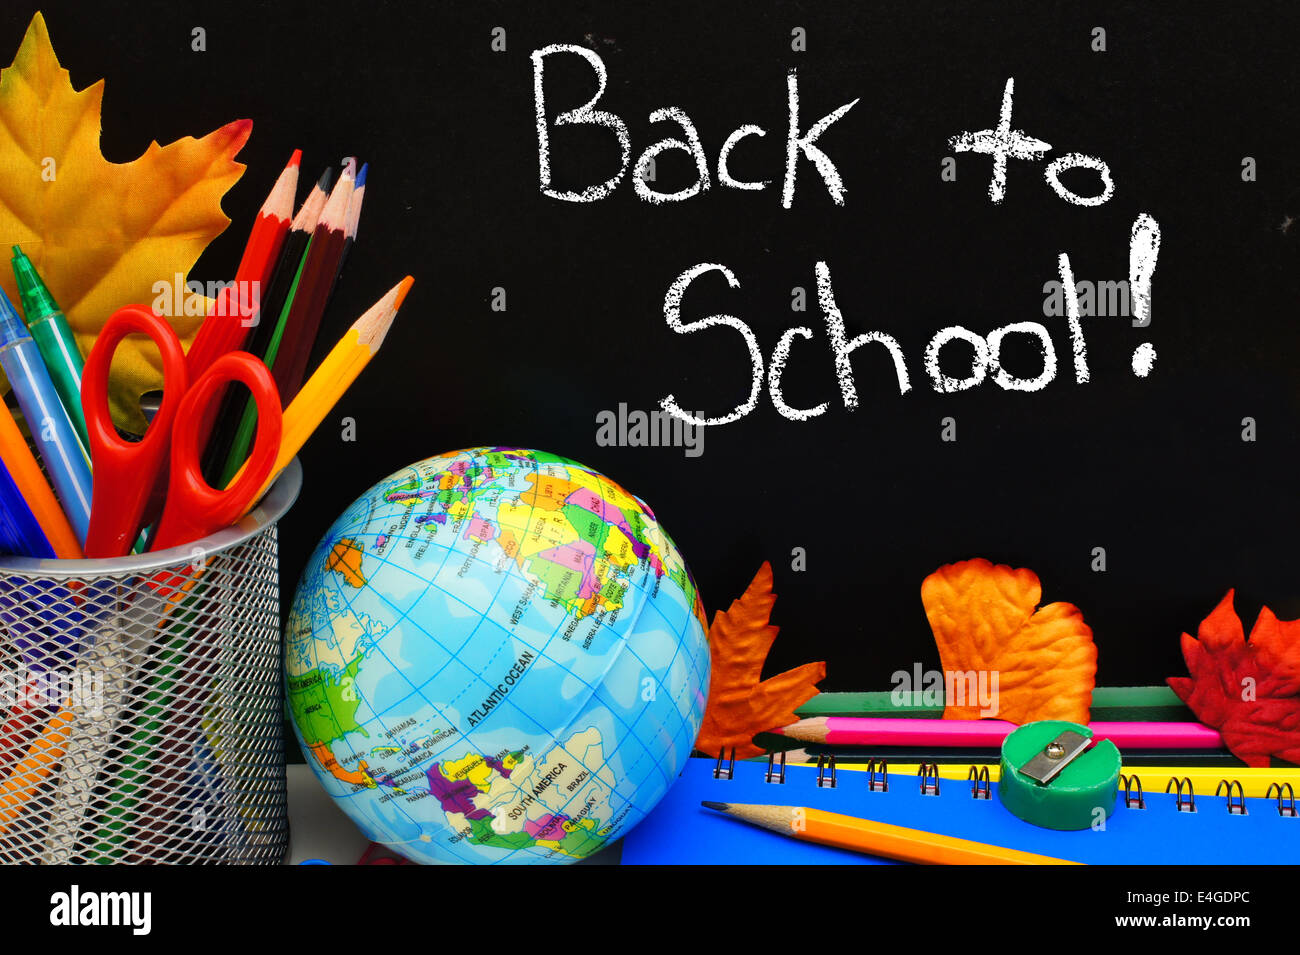 Back to School written on a blackboard with school supplies Stock Photo